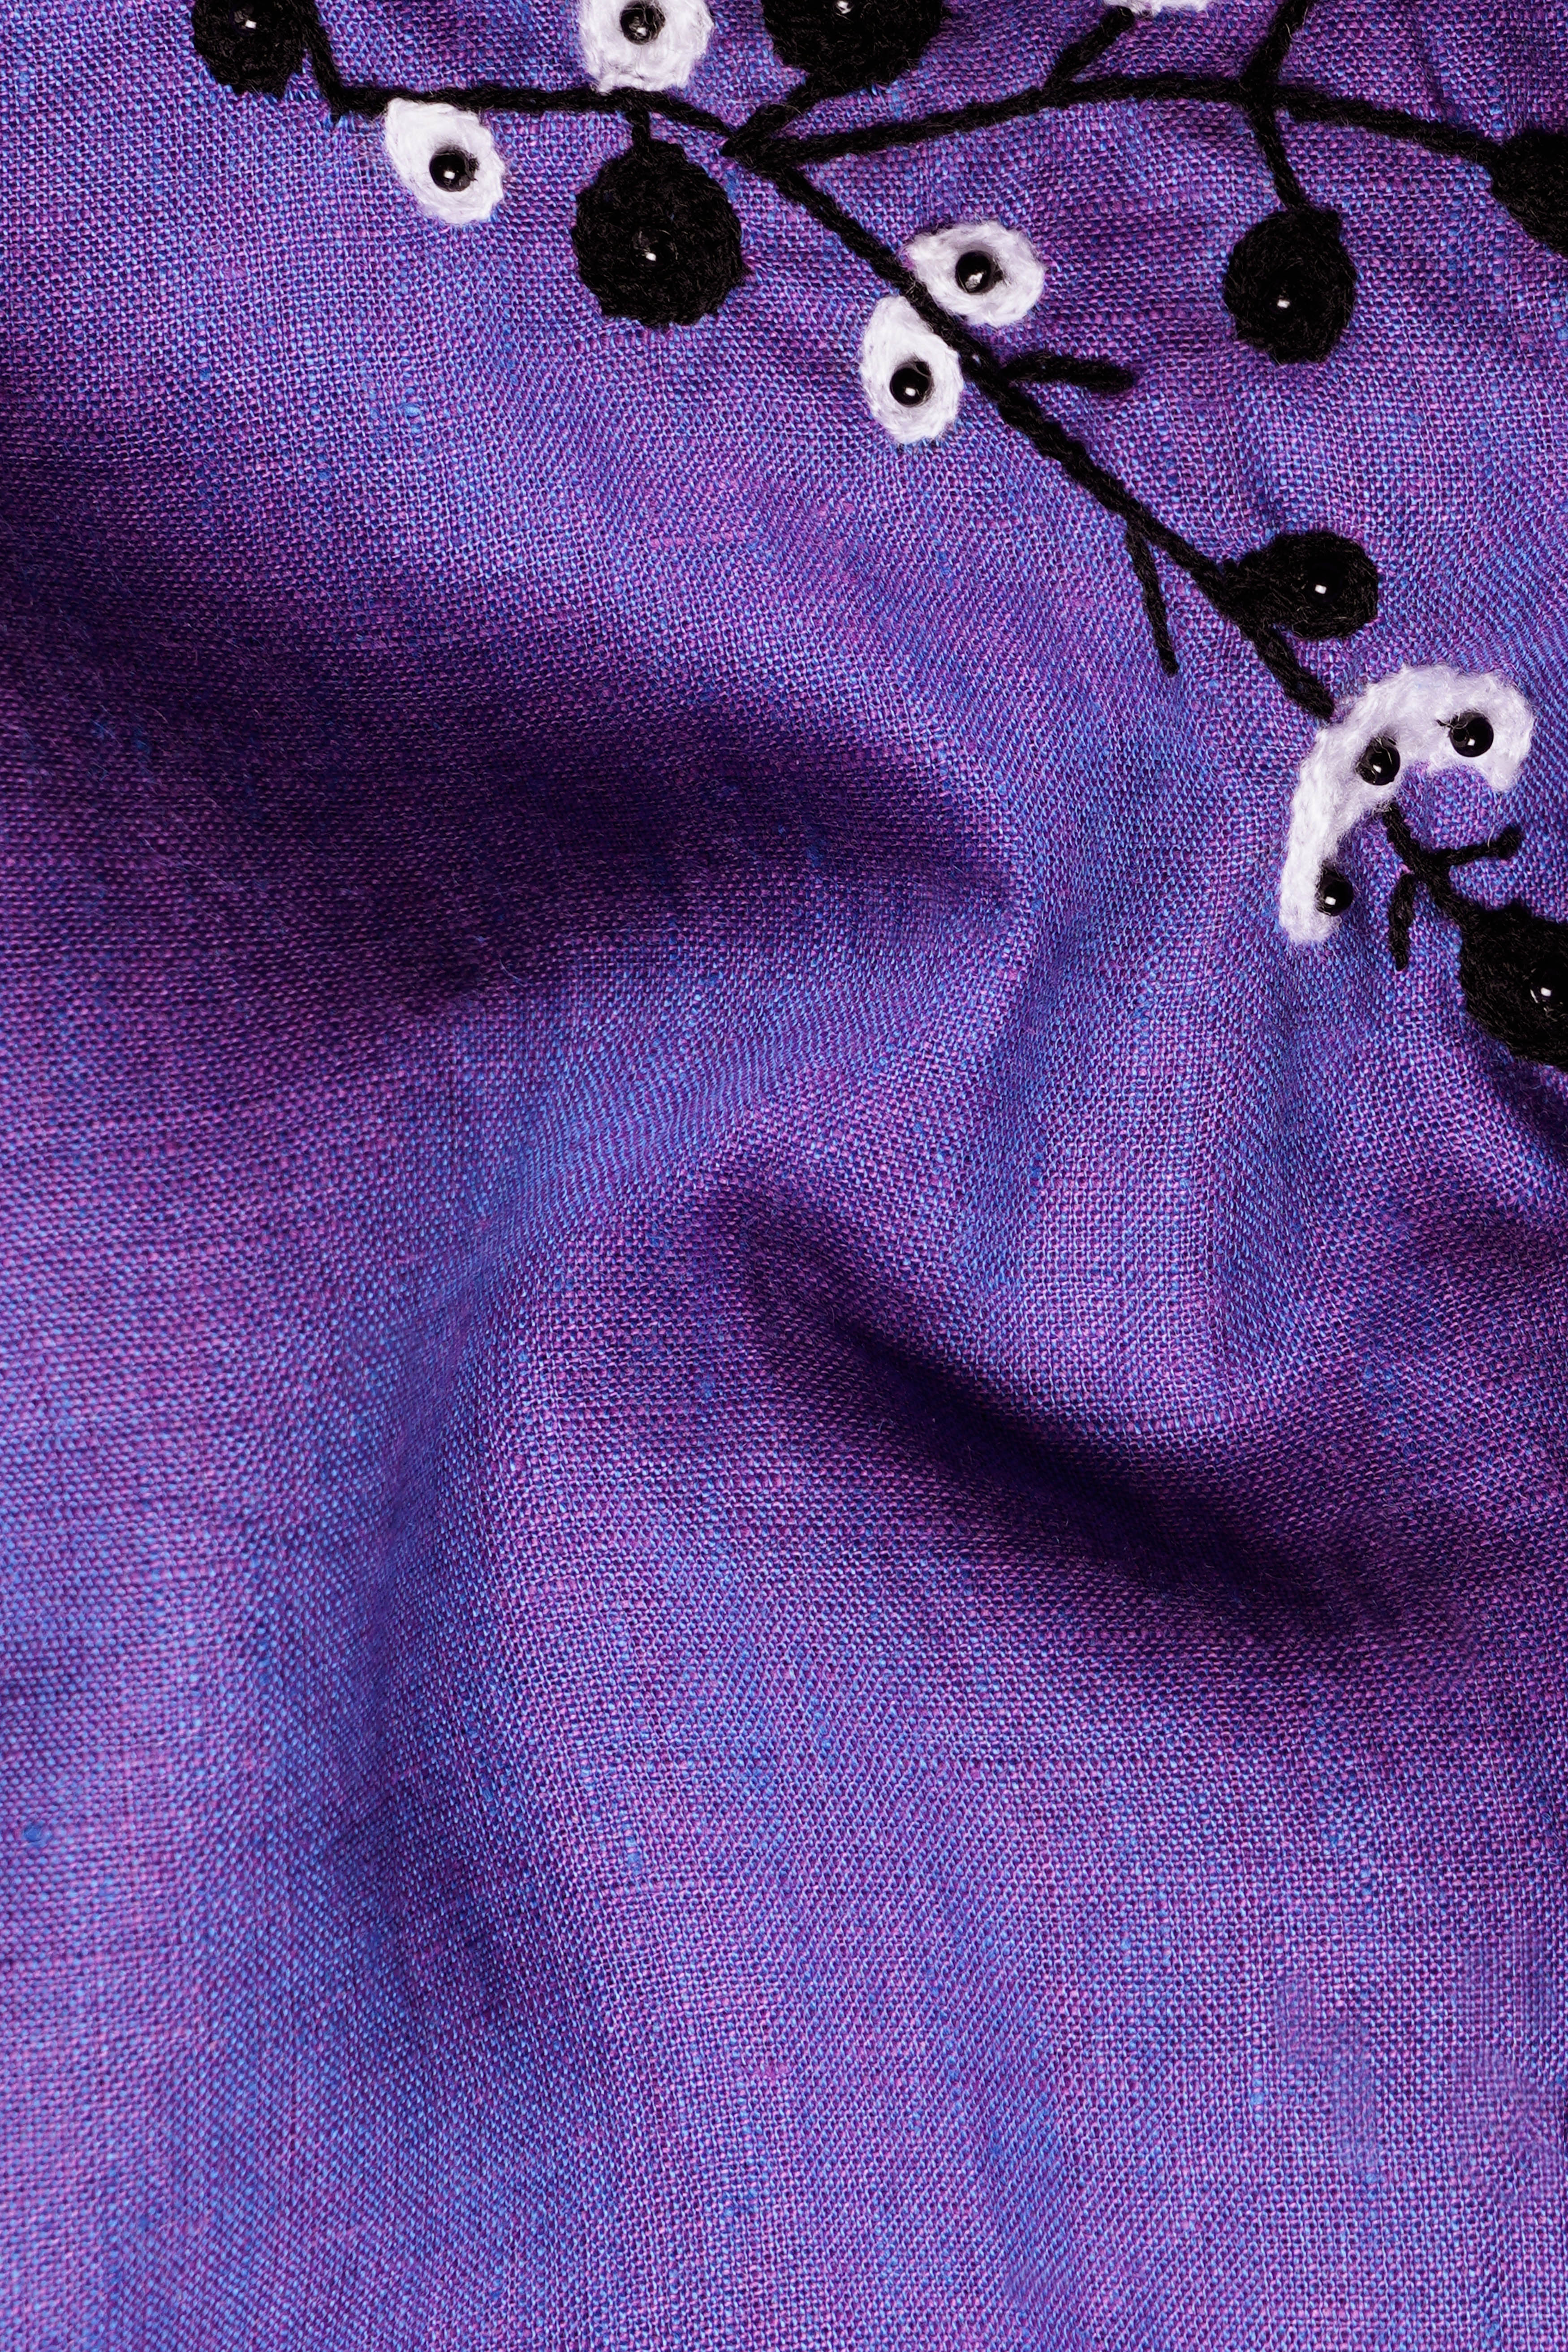 Fuchsia Purple Leaves Hand Stitched Embroidered Royal Oxford Designer Shirt 6292-BD-E208-38, 6292-BD-E208-H-38, 6292-BD-E208-39, 6292-BD-E208-H-39, 6292-BD-E208-40, 6292-BD-E208-H-40, 6292-BD-E208-42, 6292-BD-E208-H-42, 6292-BD-E208-44, 6292-BD-E208-H-44, 6292-BD-E208-46, 6292-BD-E208-H-46, 6292-BD-E208-48, 6292-BD-E208-H-48, 6292-BD-E208-50, 6292-BD-E208-H-50, 6292-BD-E208-52, 6292-BD-E208-H-52